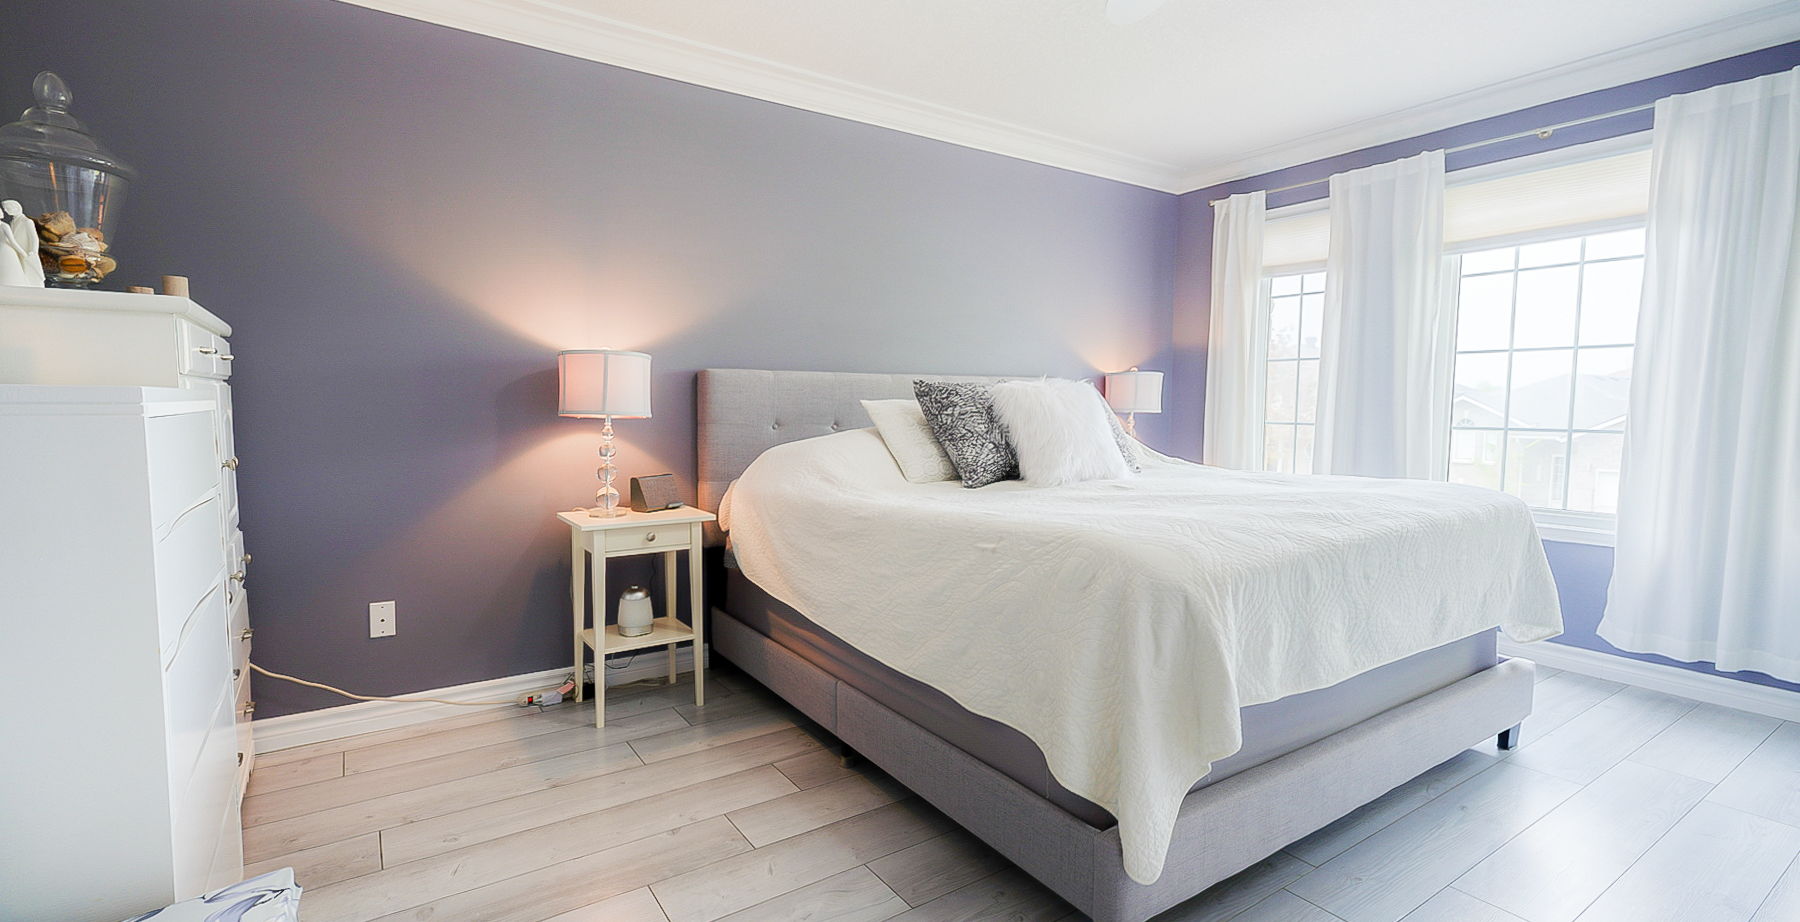 hardwood floored bedroom featuring natural light